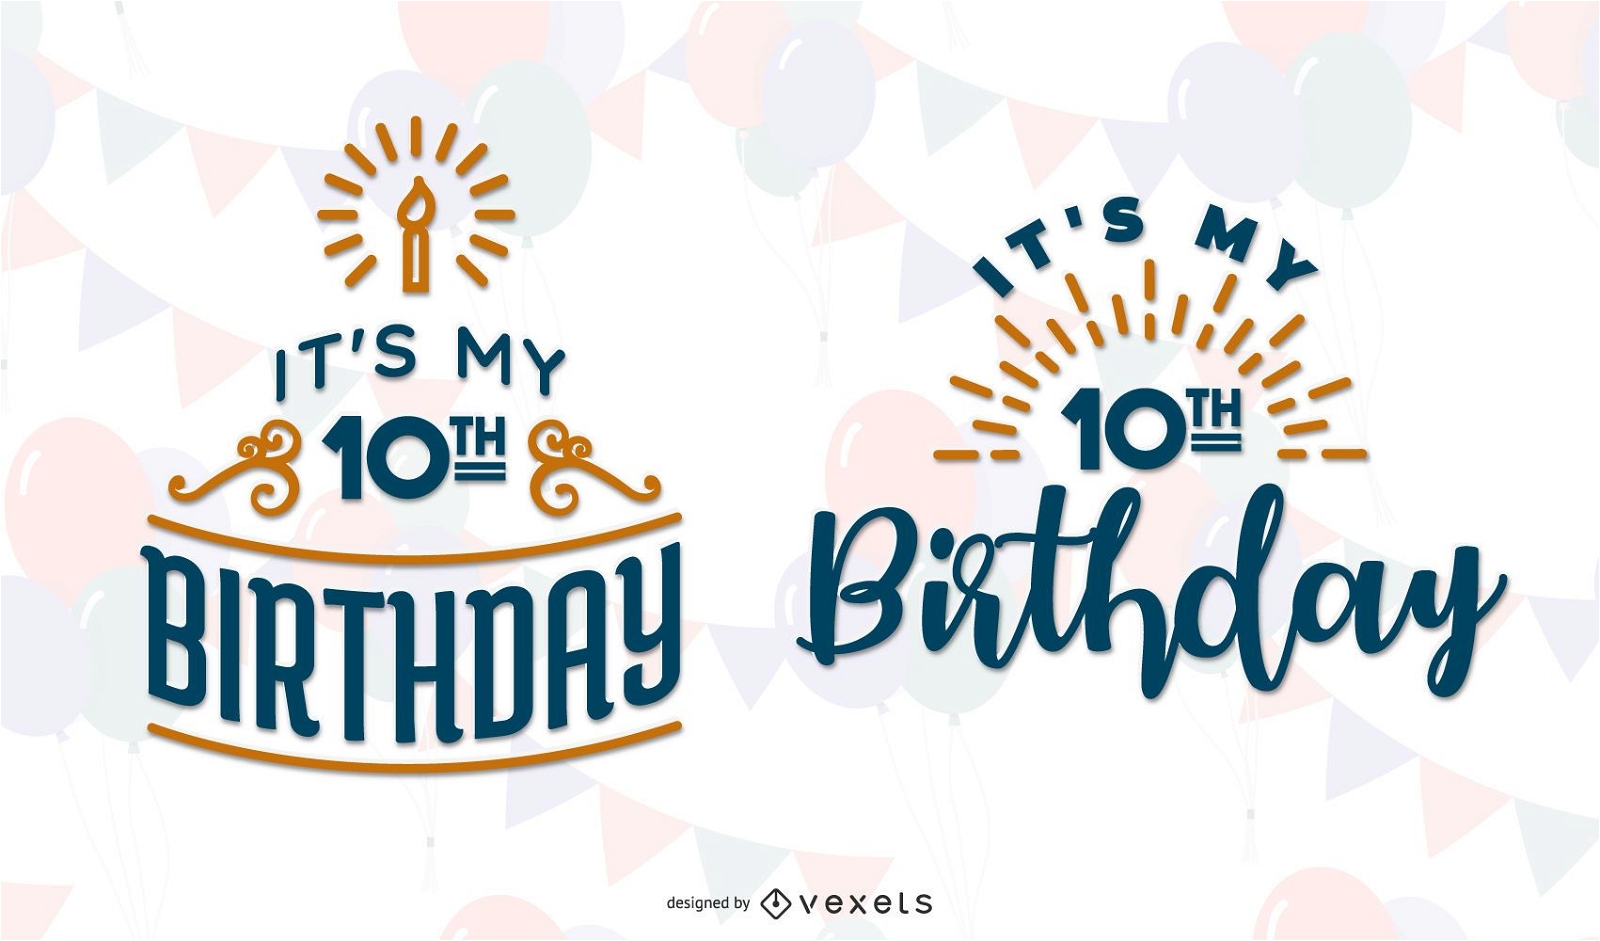 Birthday themed lettering set